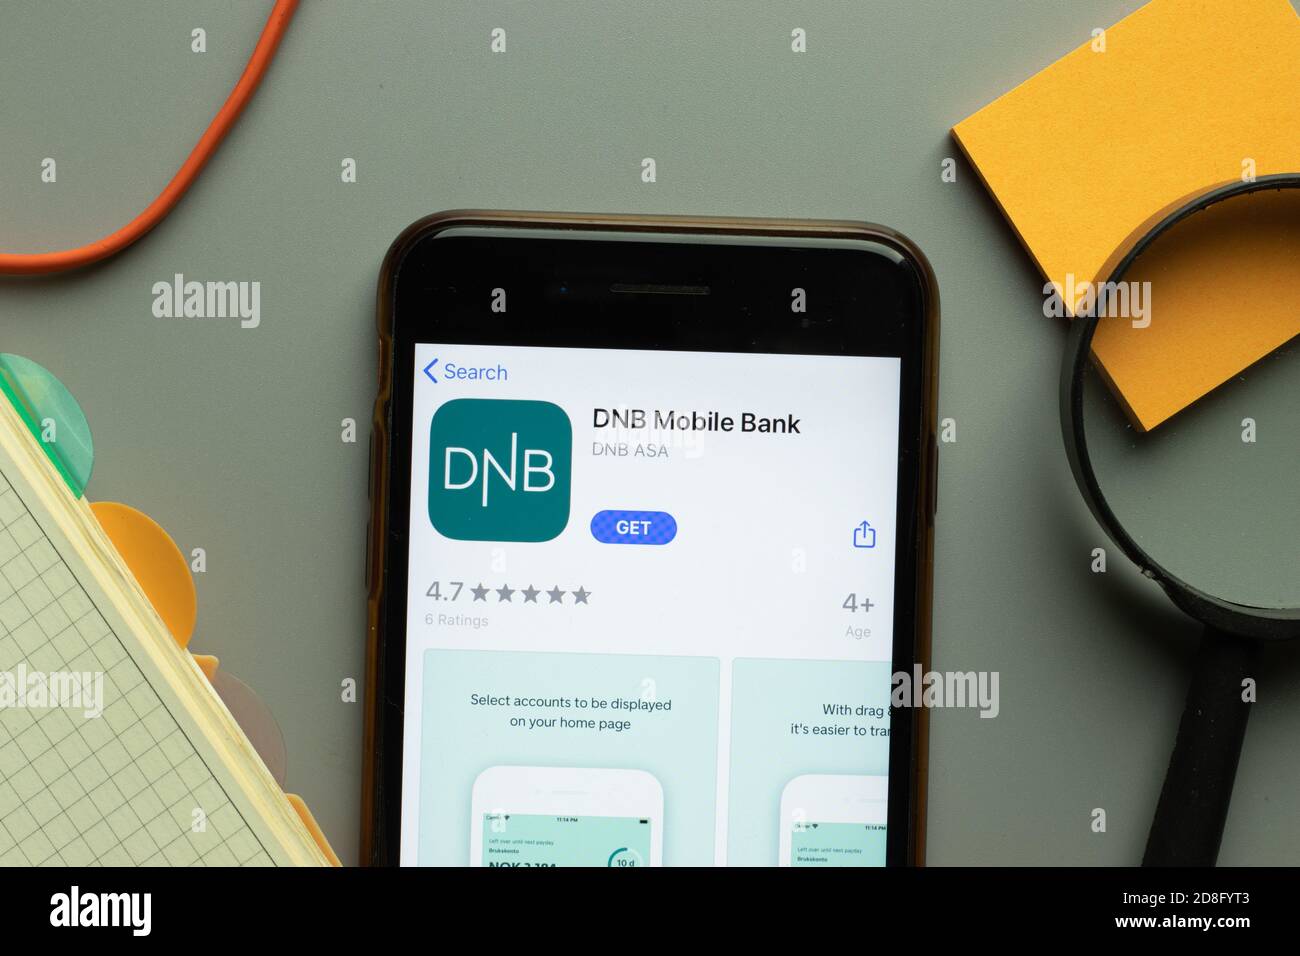 New York, USA - 26. Oktober 2020: DNB Mobile Bank App Logo auf dem Handy-Bildschirm Nahaufnahme, illustrative Editorial Stockfoto